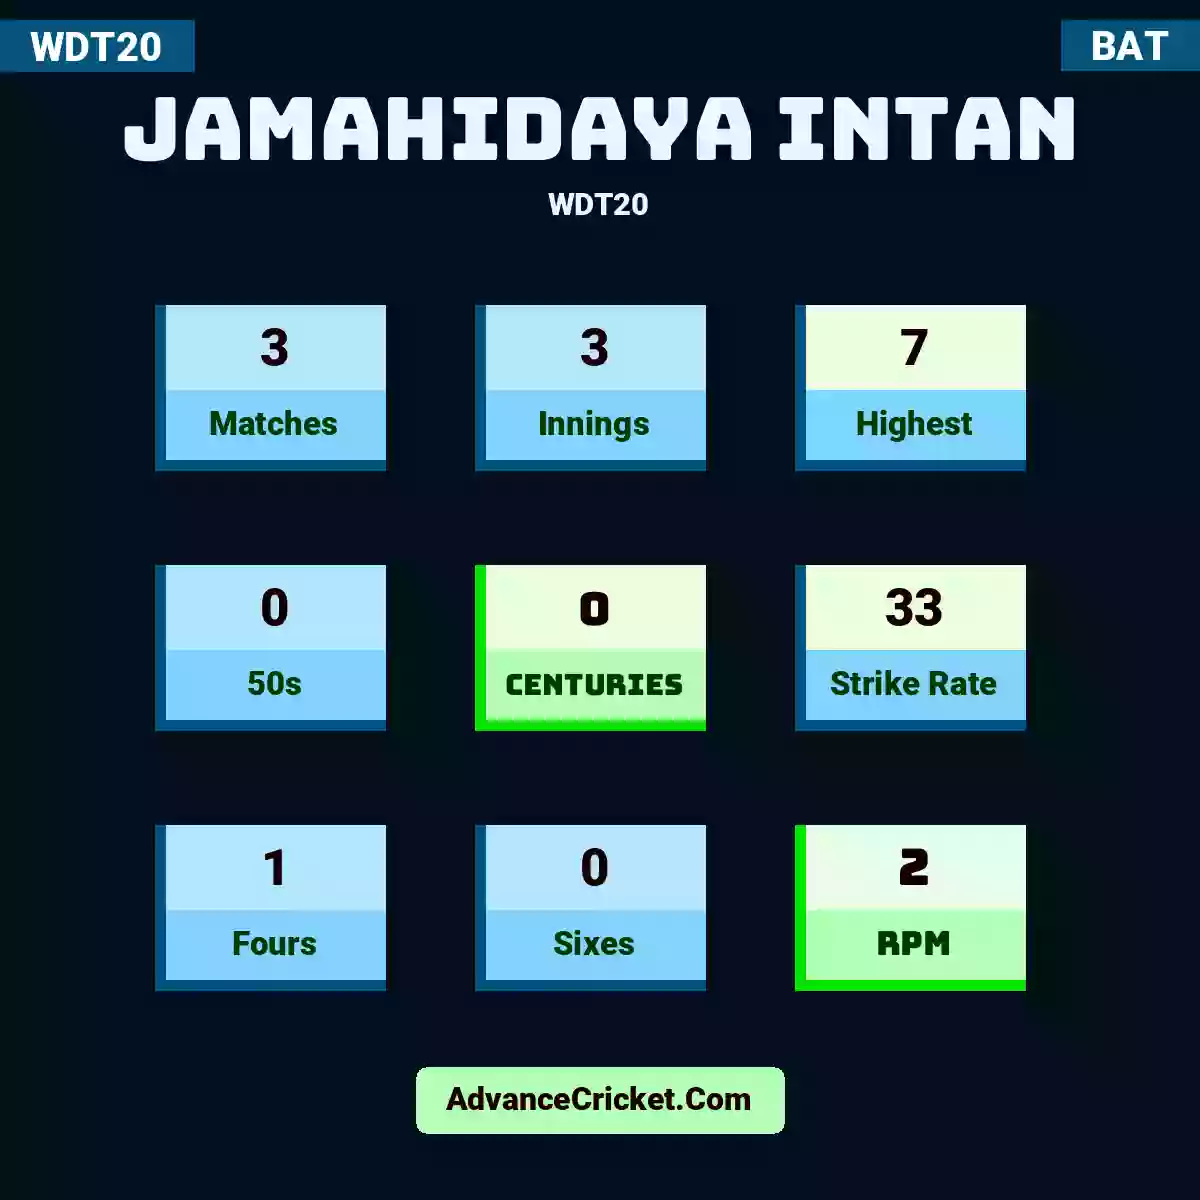 Jamahidaya Intan WDT20 , Jamahidaya Intan played 3 matches, scored 7 runs as highest, 0 half-centuries, and 0 centuries, with a strike rate of 33. J.Intan hit 1 fours and 0 sixes, with an RPM of 2.